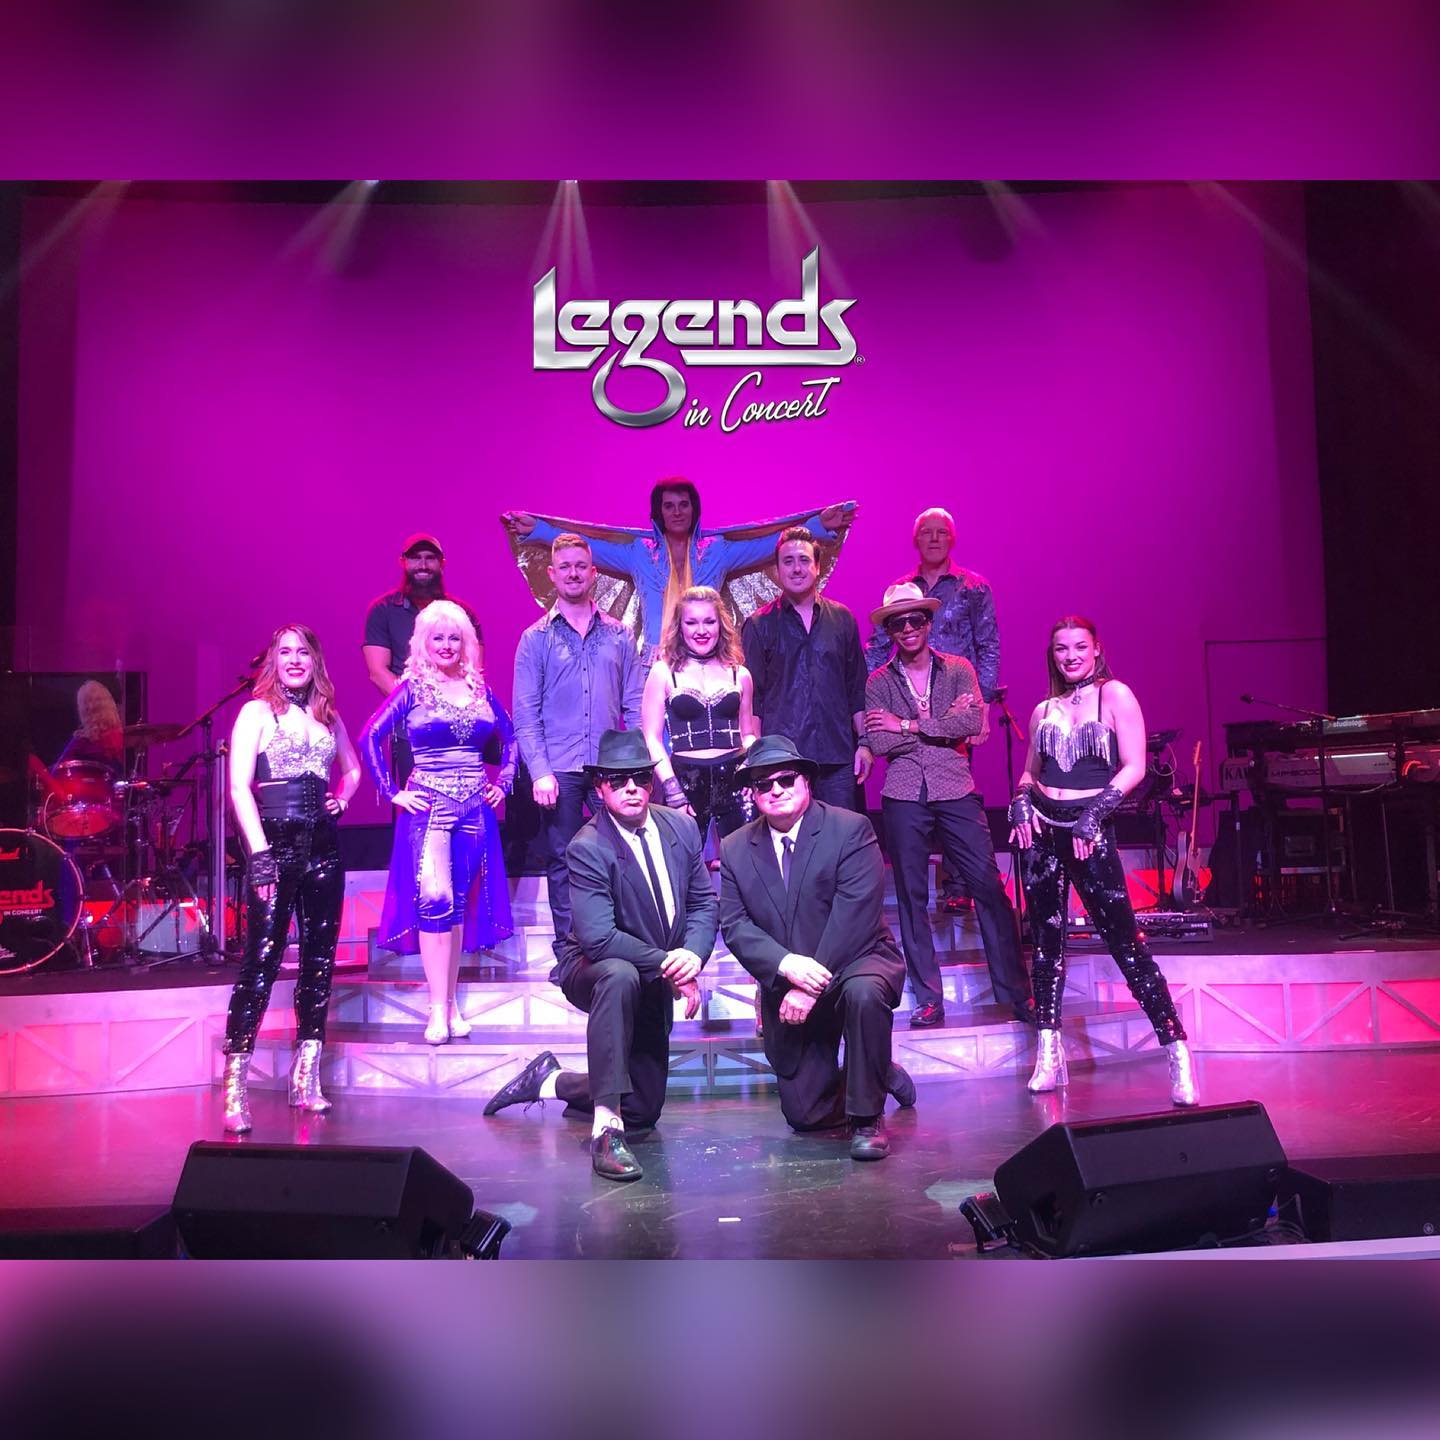 Legends in Concert Theater in Myrtle Beach, SC Find Rentals